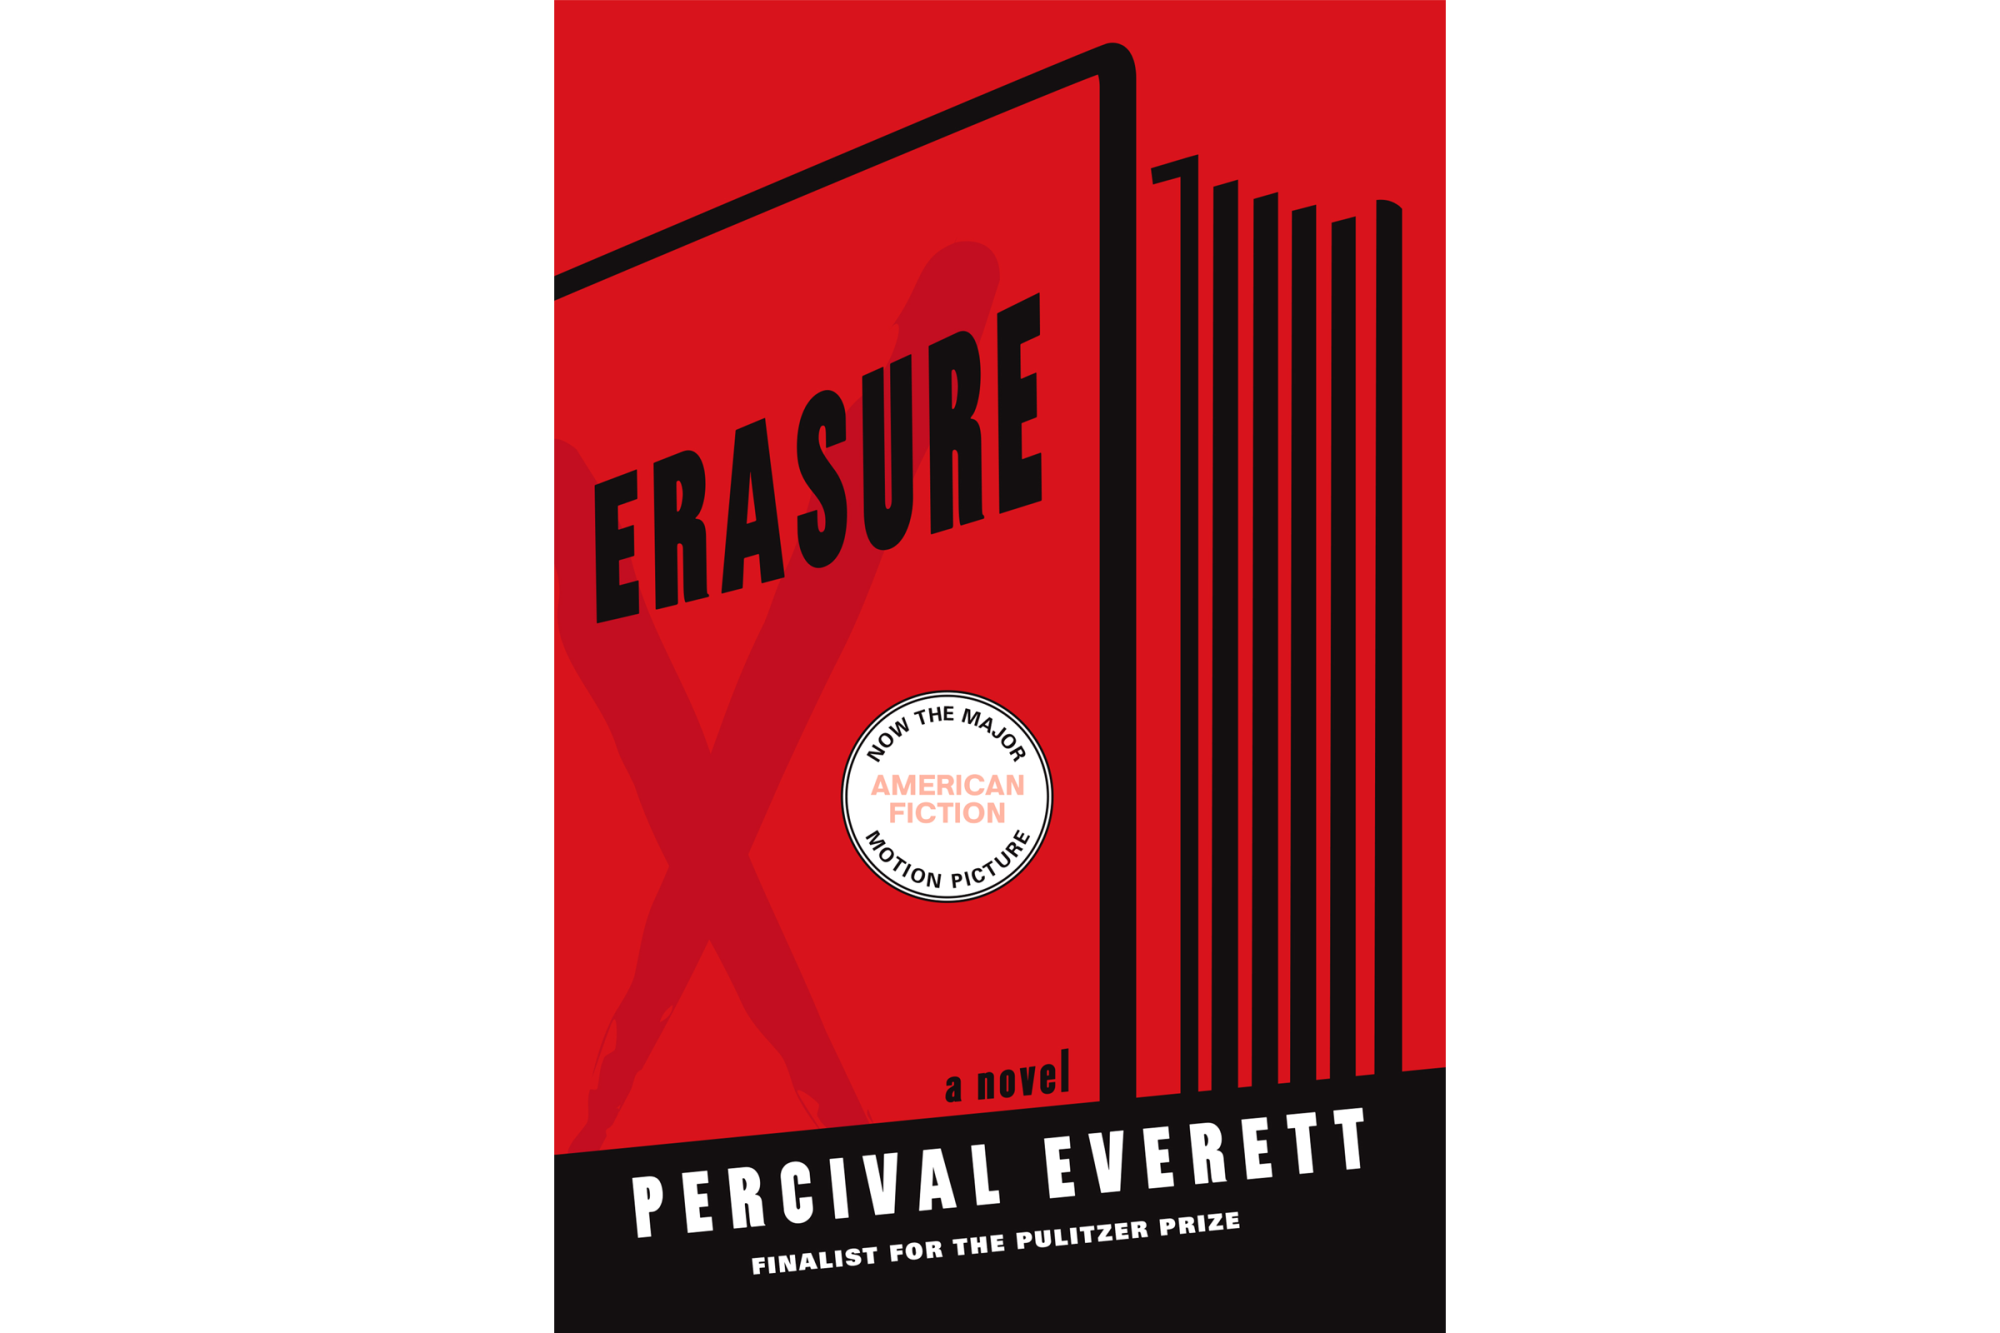 "Erasure" by Percival Everett